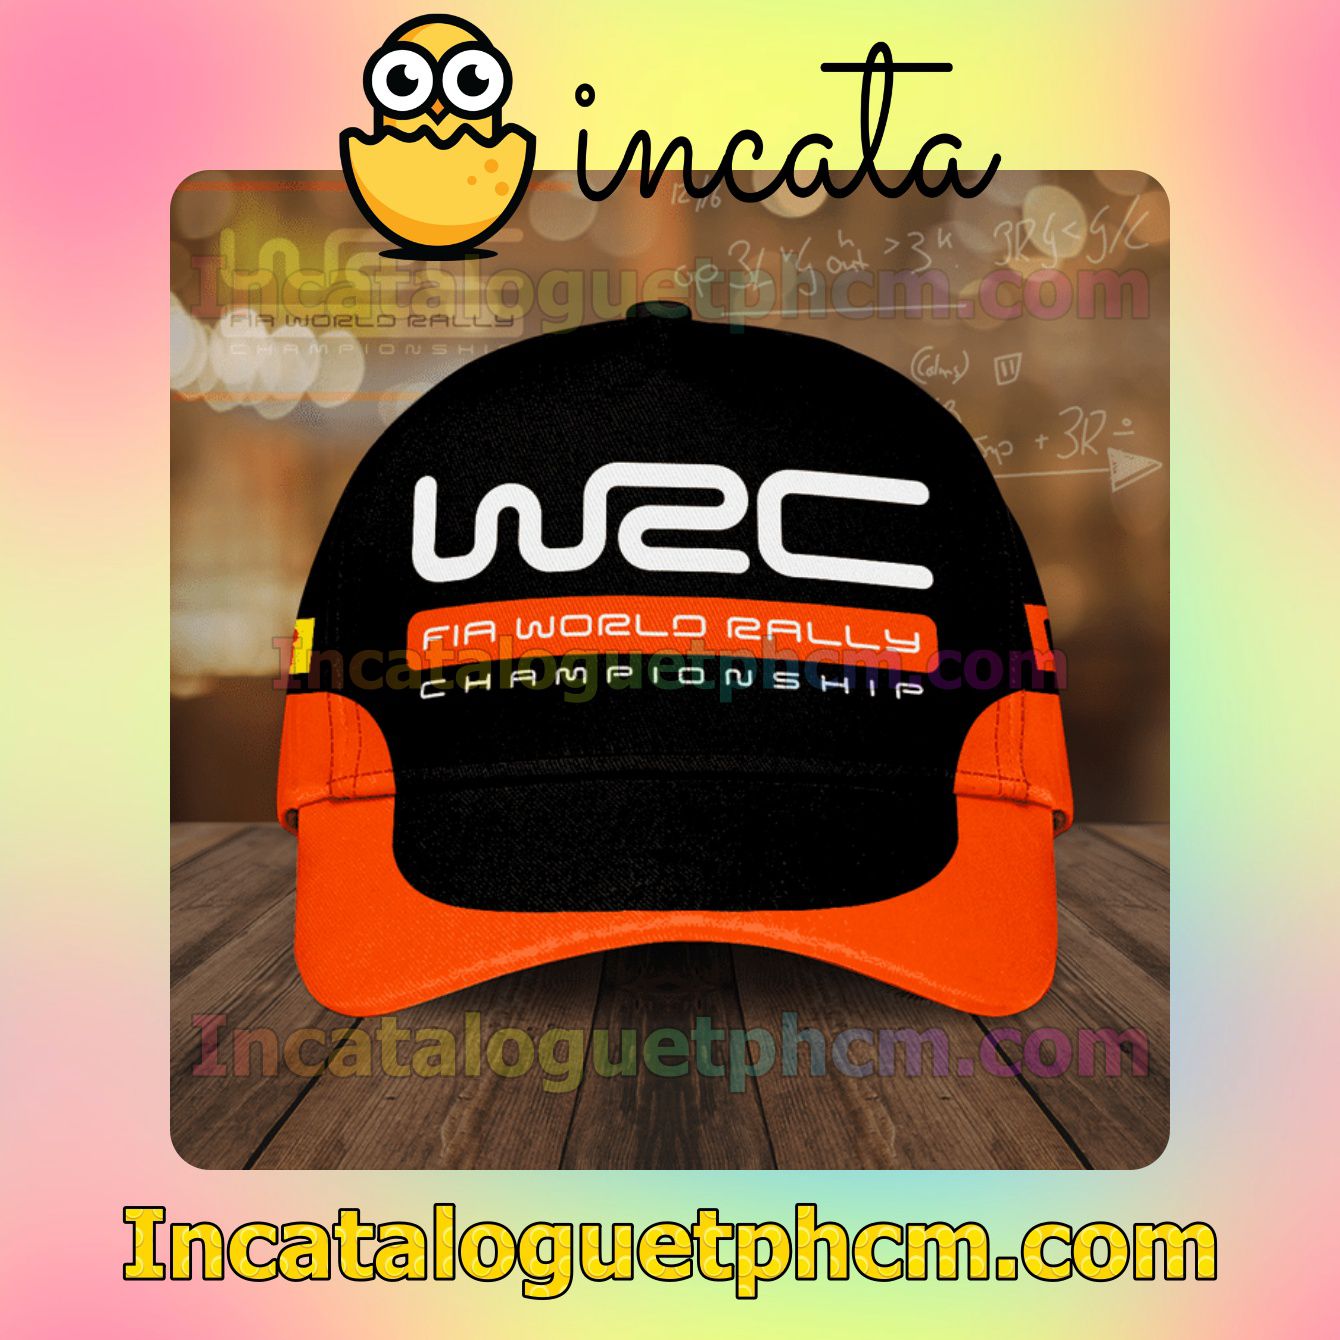 Wrc Fia World Rally Championship Orange And Black Classic Hat Caps Gift For Men